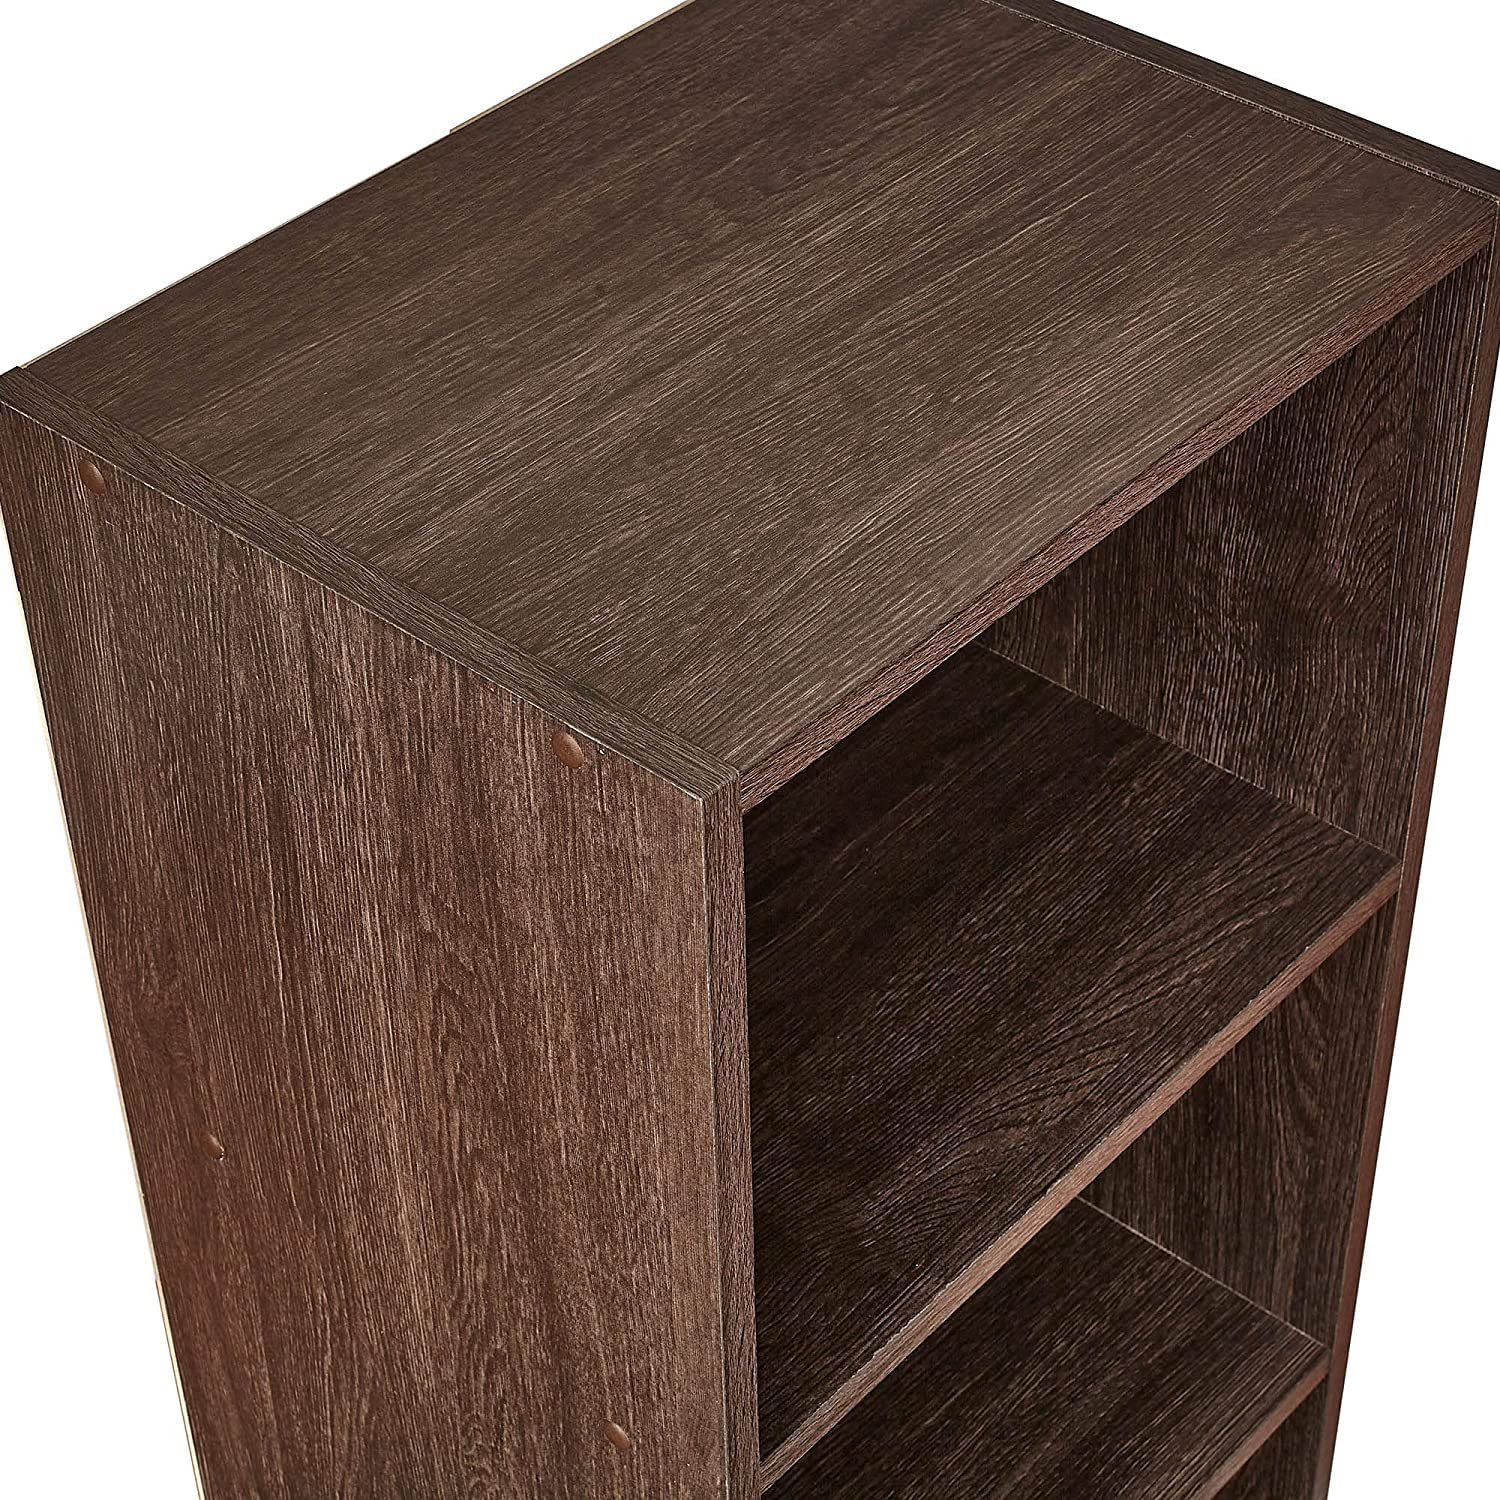 Kuber Industries Book Shelf | 3 Tier Engineered Wood Storage Shelfs | Wooden 3 Shelves Home Decor Showcase Cabinets | Storage Racks for Kitchen/Living/Study Room| 34 x 11 x 5